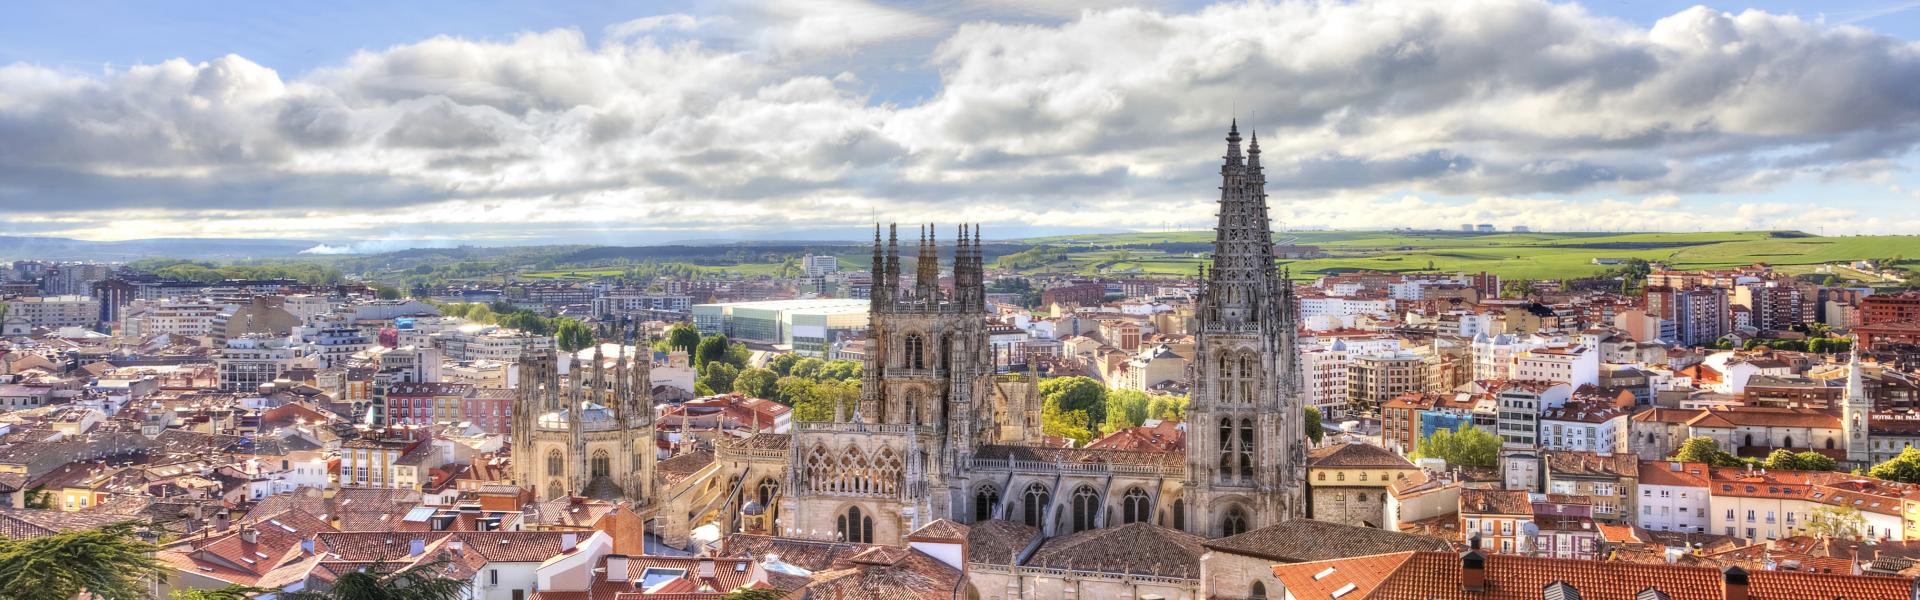 Burgos Scenic View